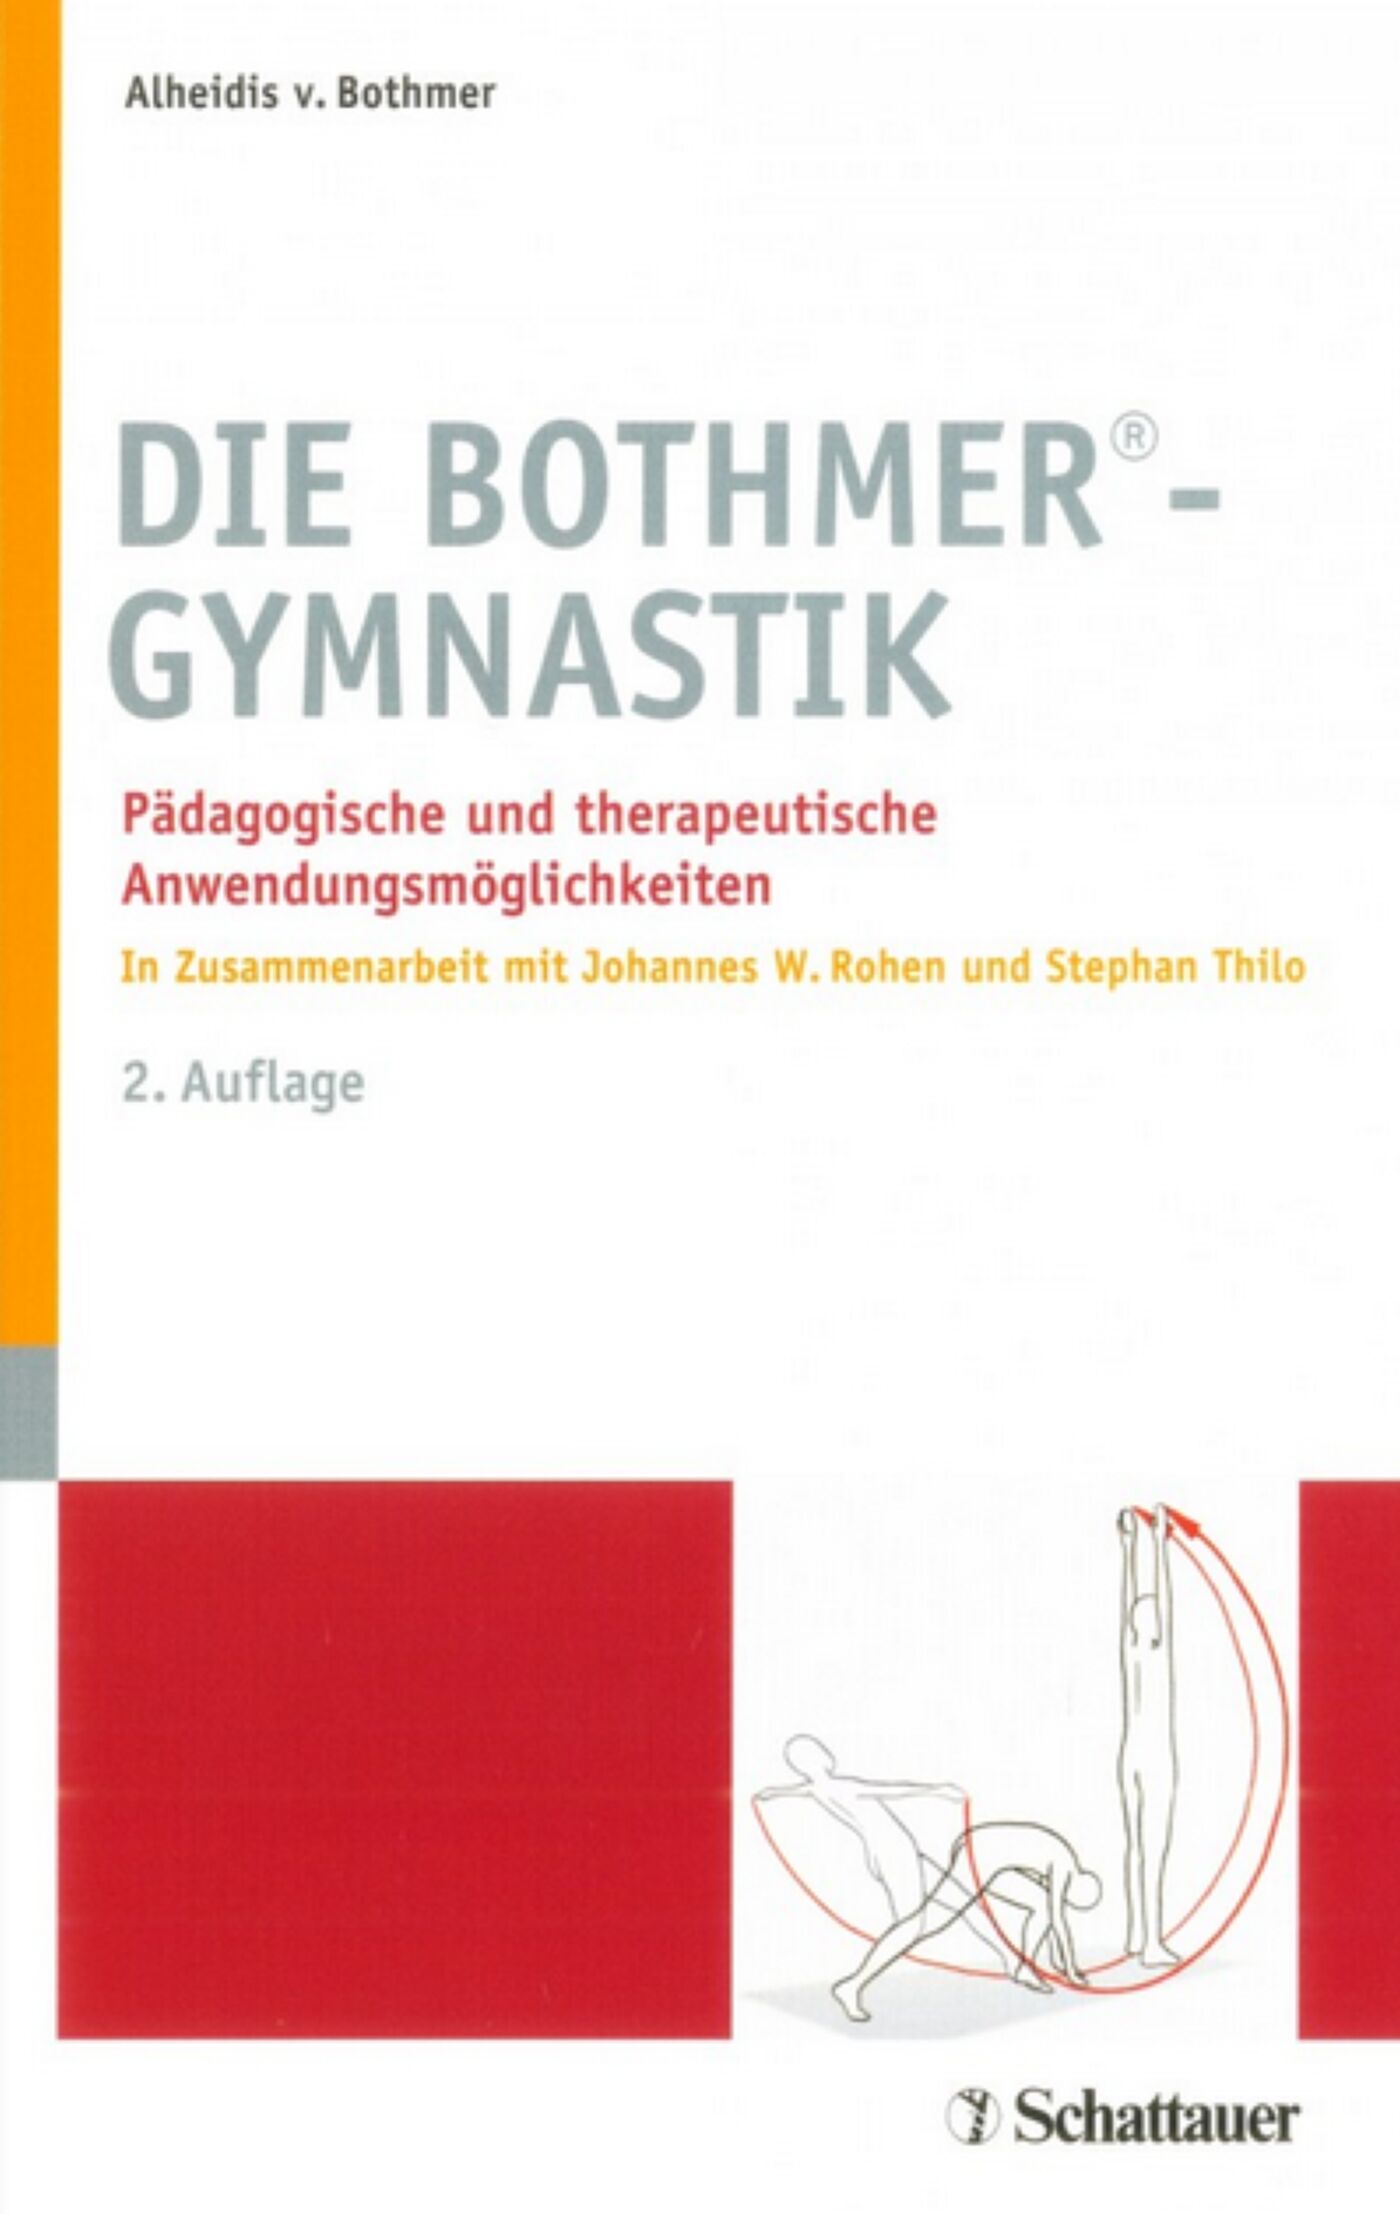 Die Bothmer Gymnastik, 9783794567447